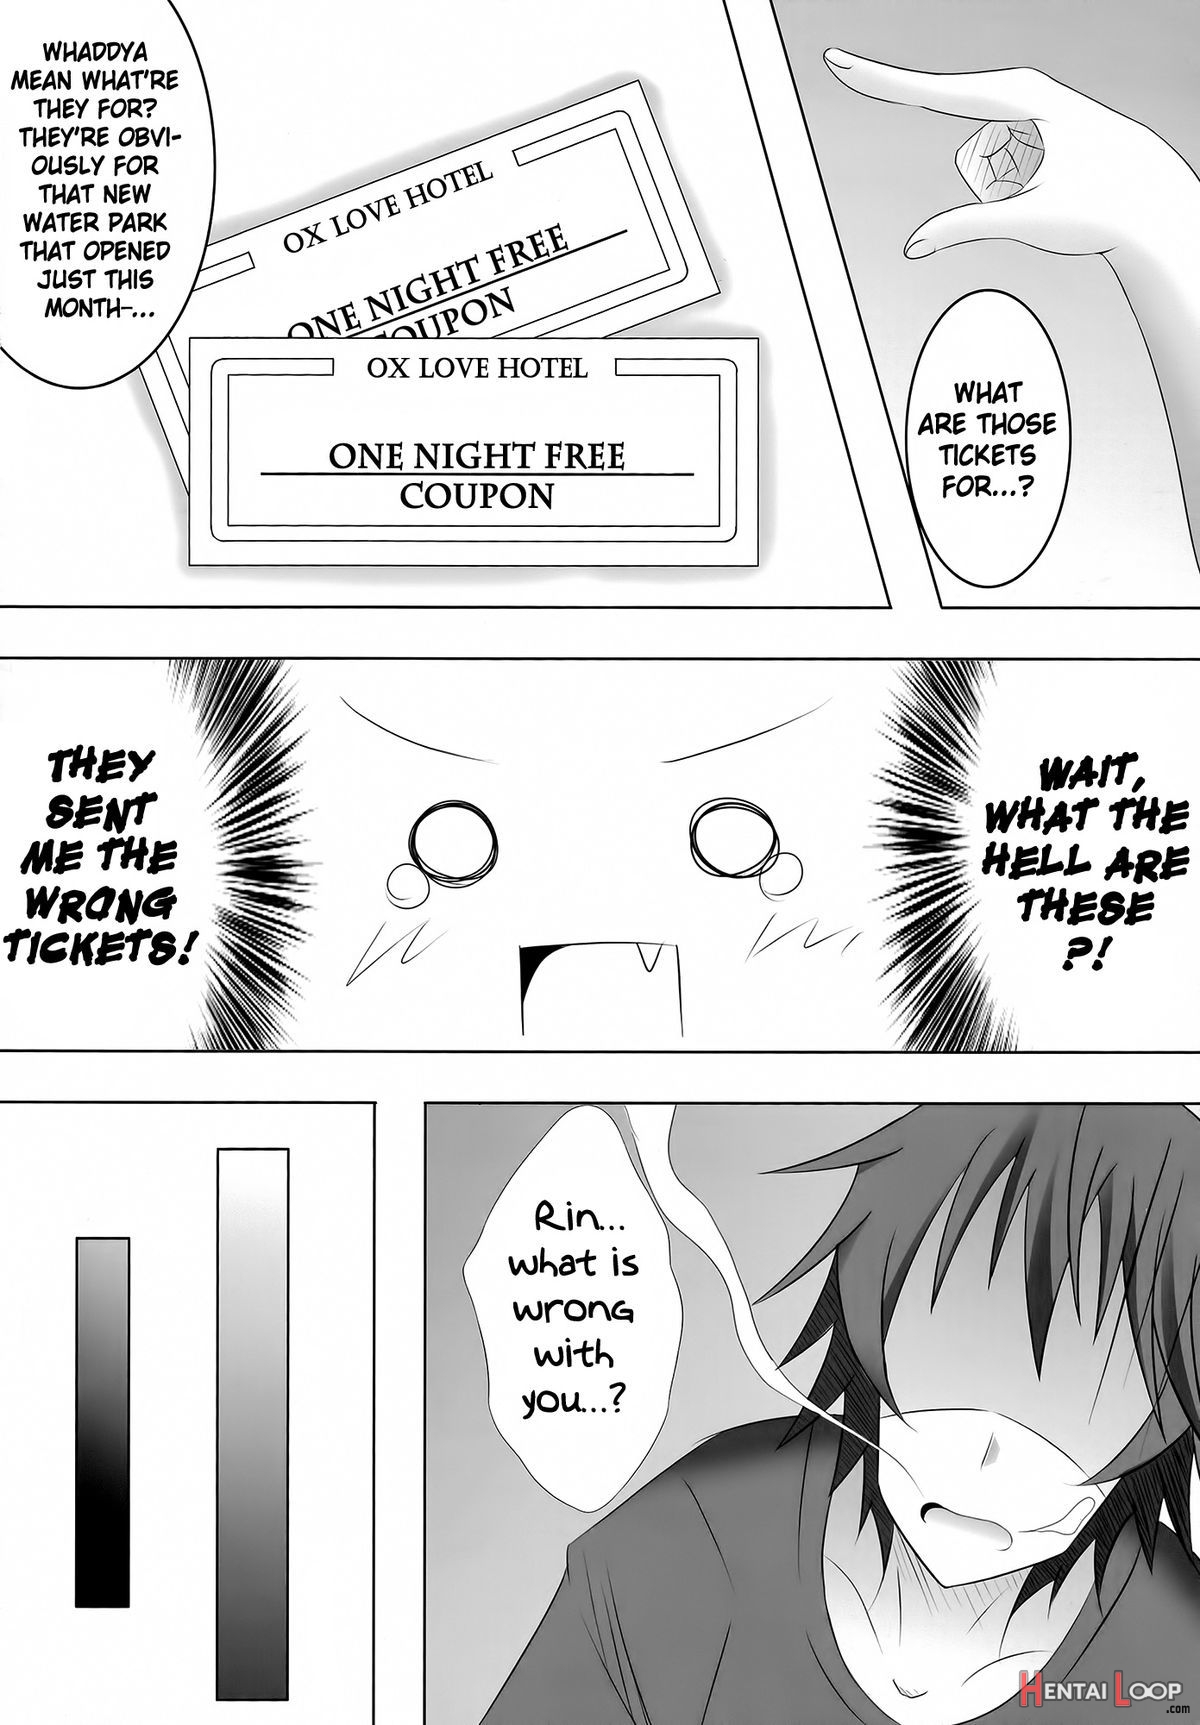 Ichika, You Better Take Responsibility! page 4